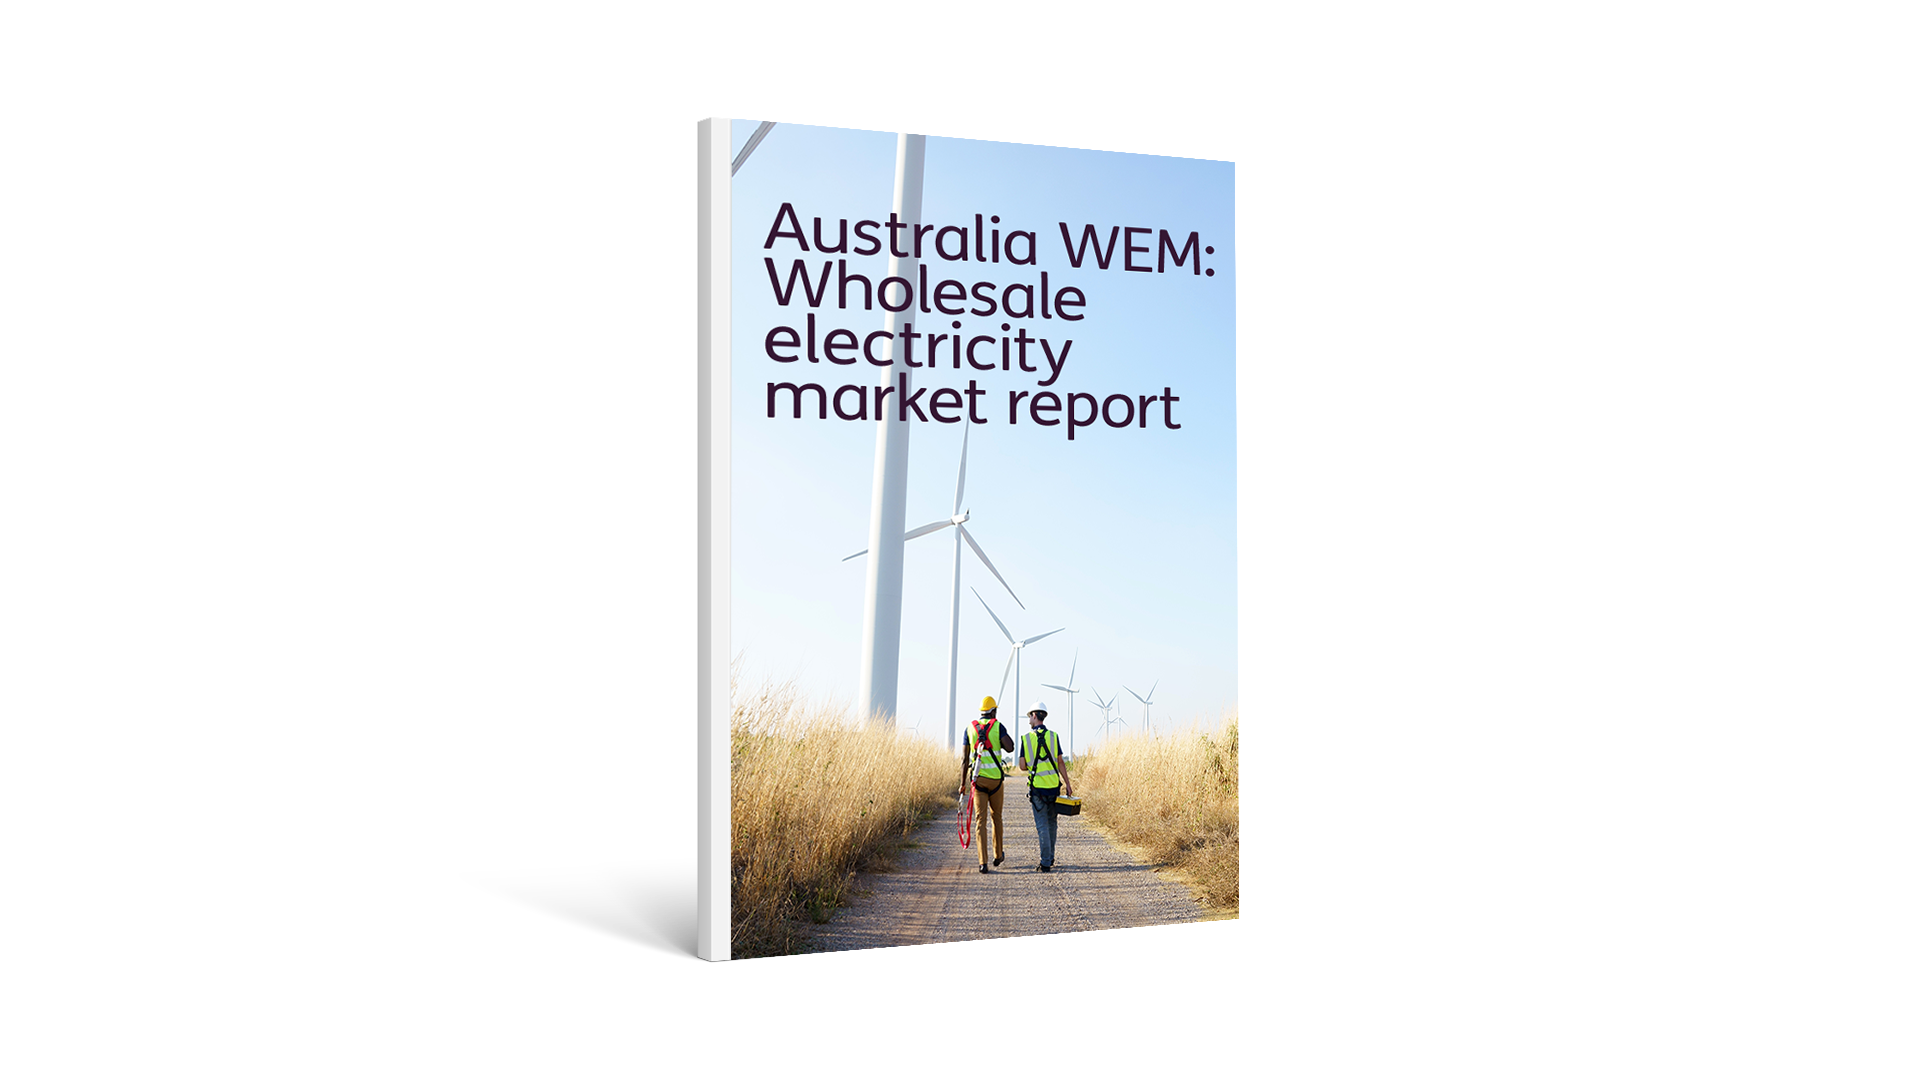 Australia WEM: Wholesale electricity market report